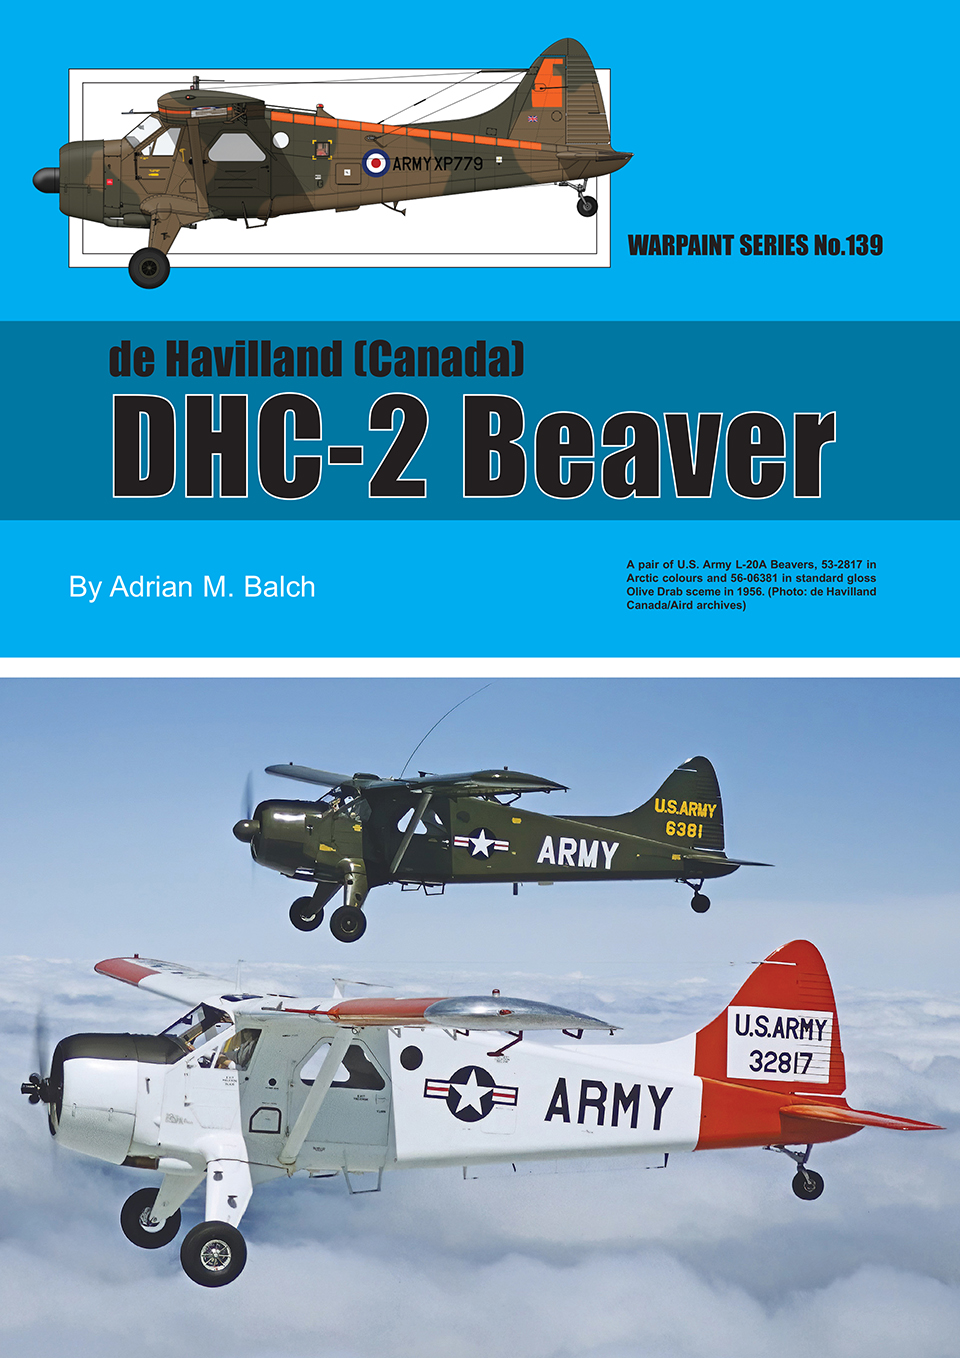 Guideline Publications Ltd Warpaint 139 de Havilland (Canada) DHC-2 Beaver By Adrian M Balch 